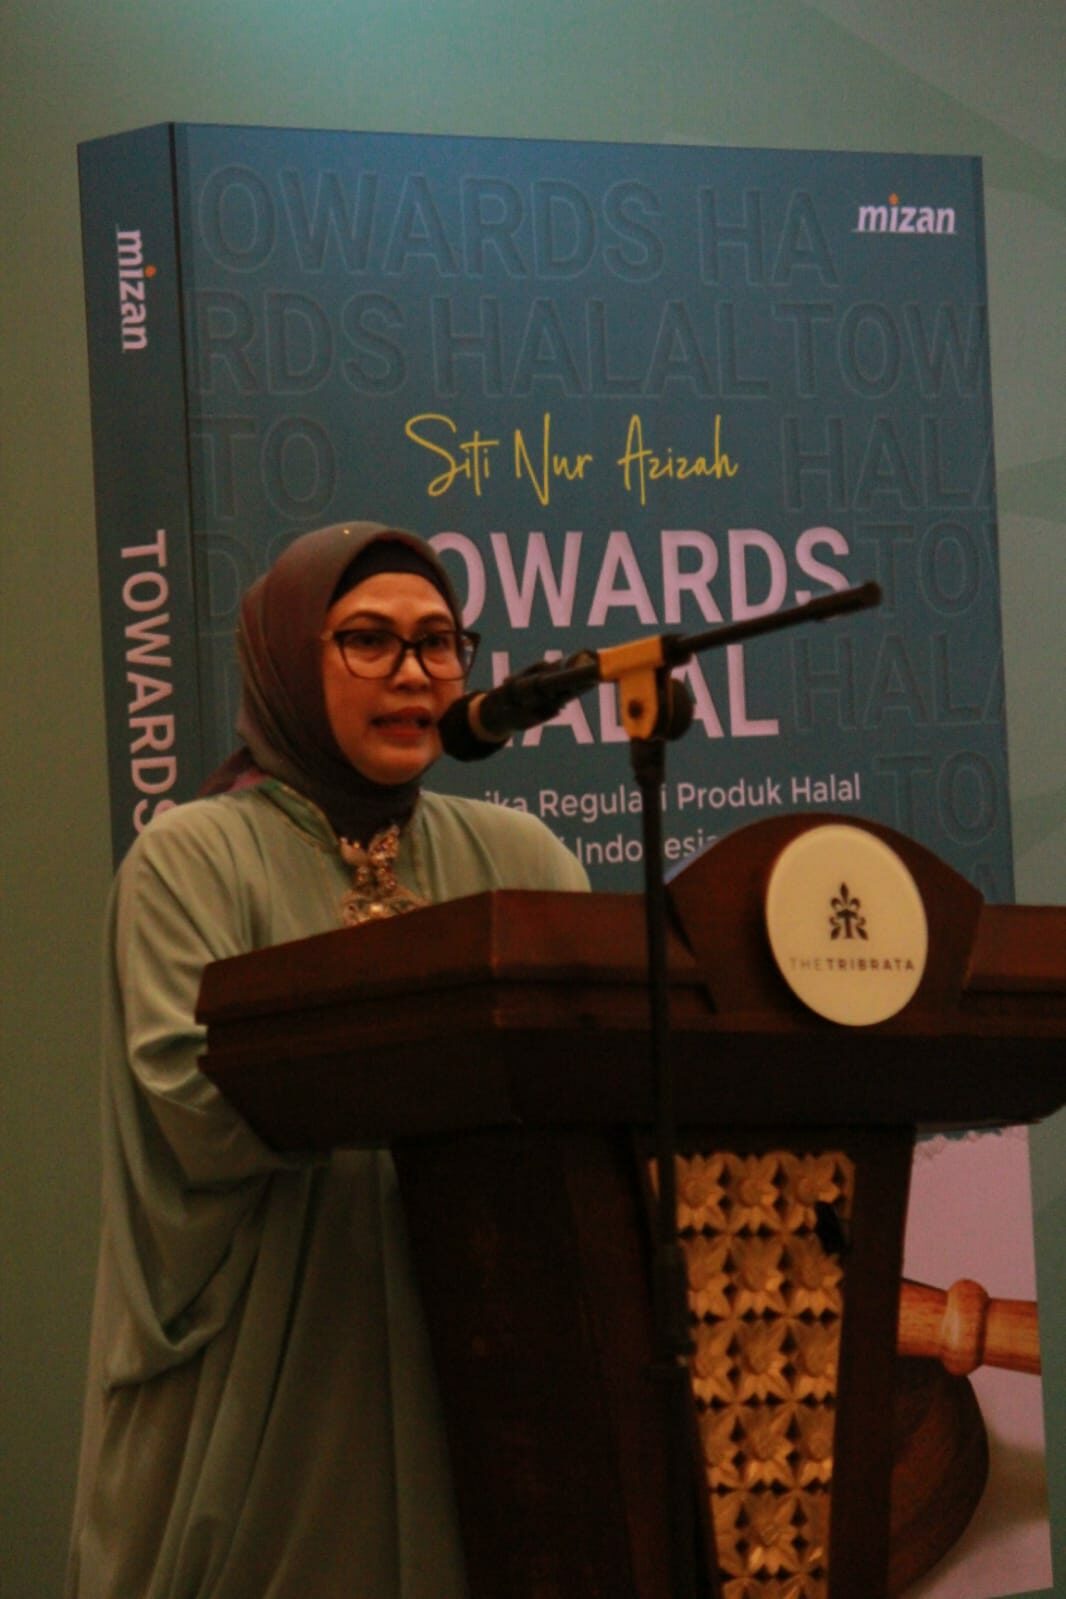 Buku Towards Halal Karya Siti Nur Azizah: Ekonomi Syariah Harus Untungkan Rakyat